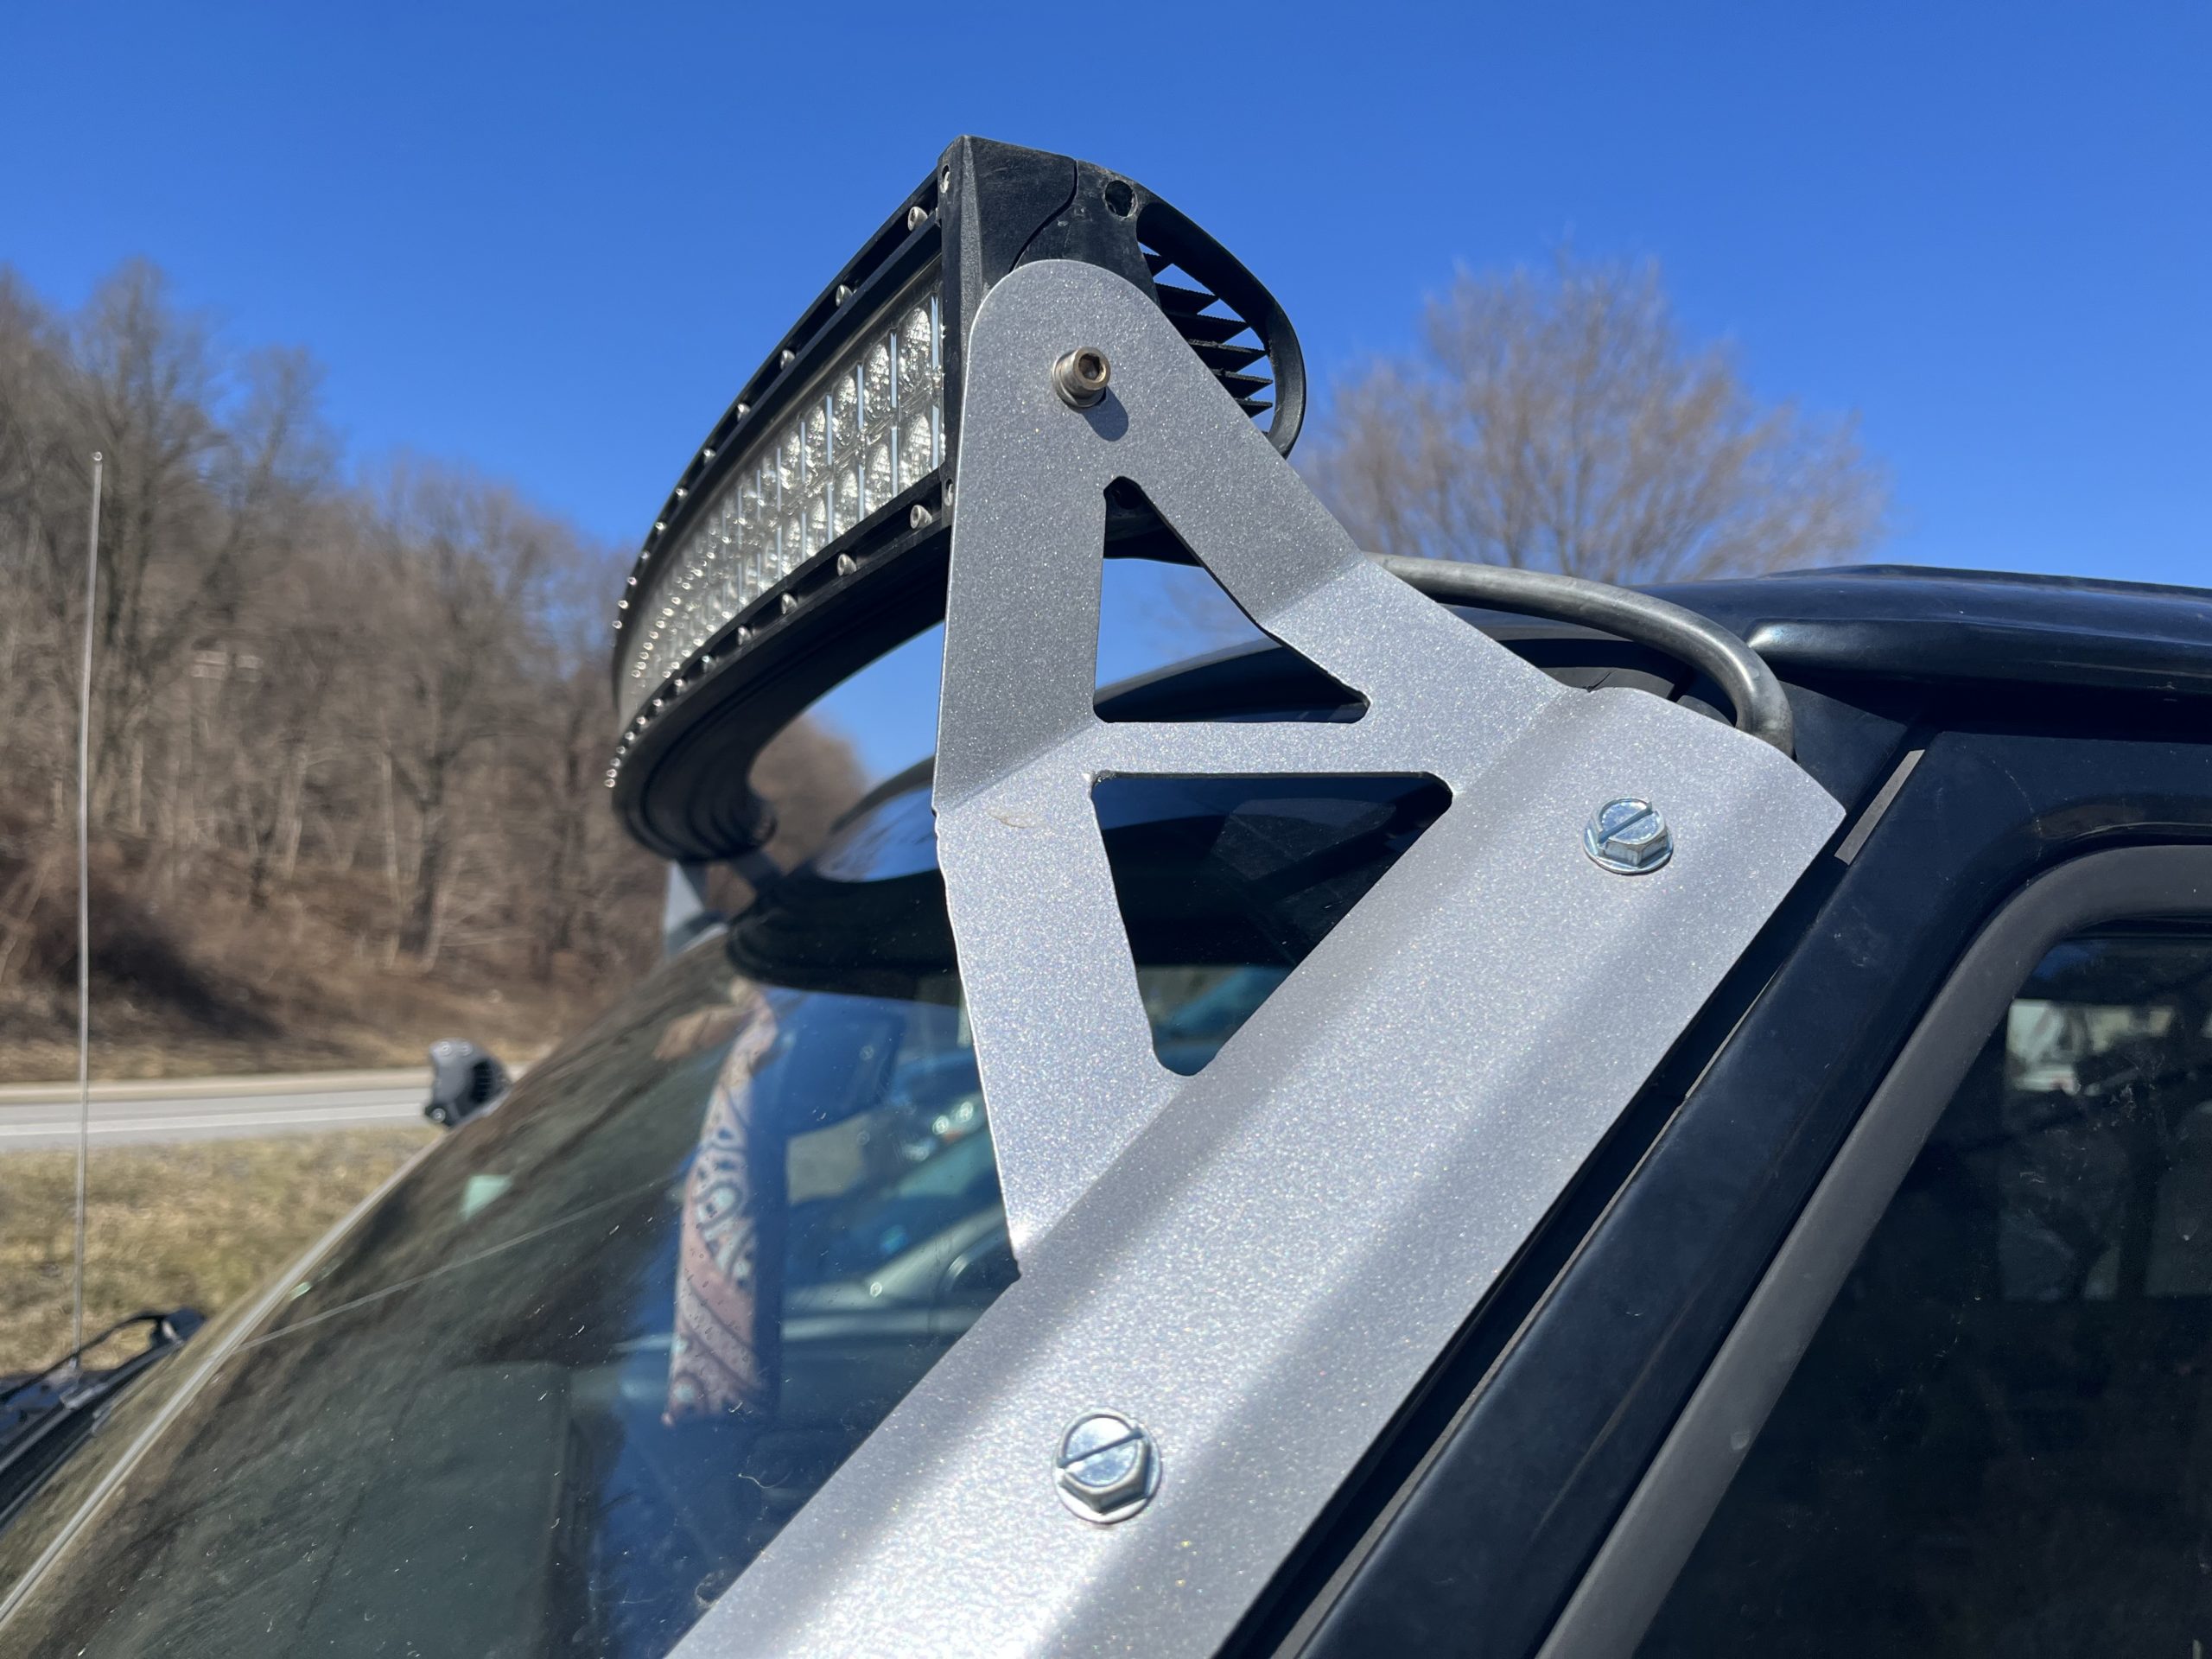 Windshield Pillar Mount Brackets LED Light Bar FITS Jeep Grand Cherokee WJ 99-04